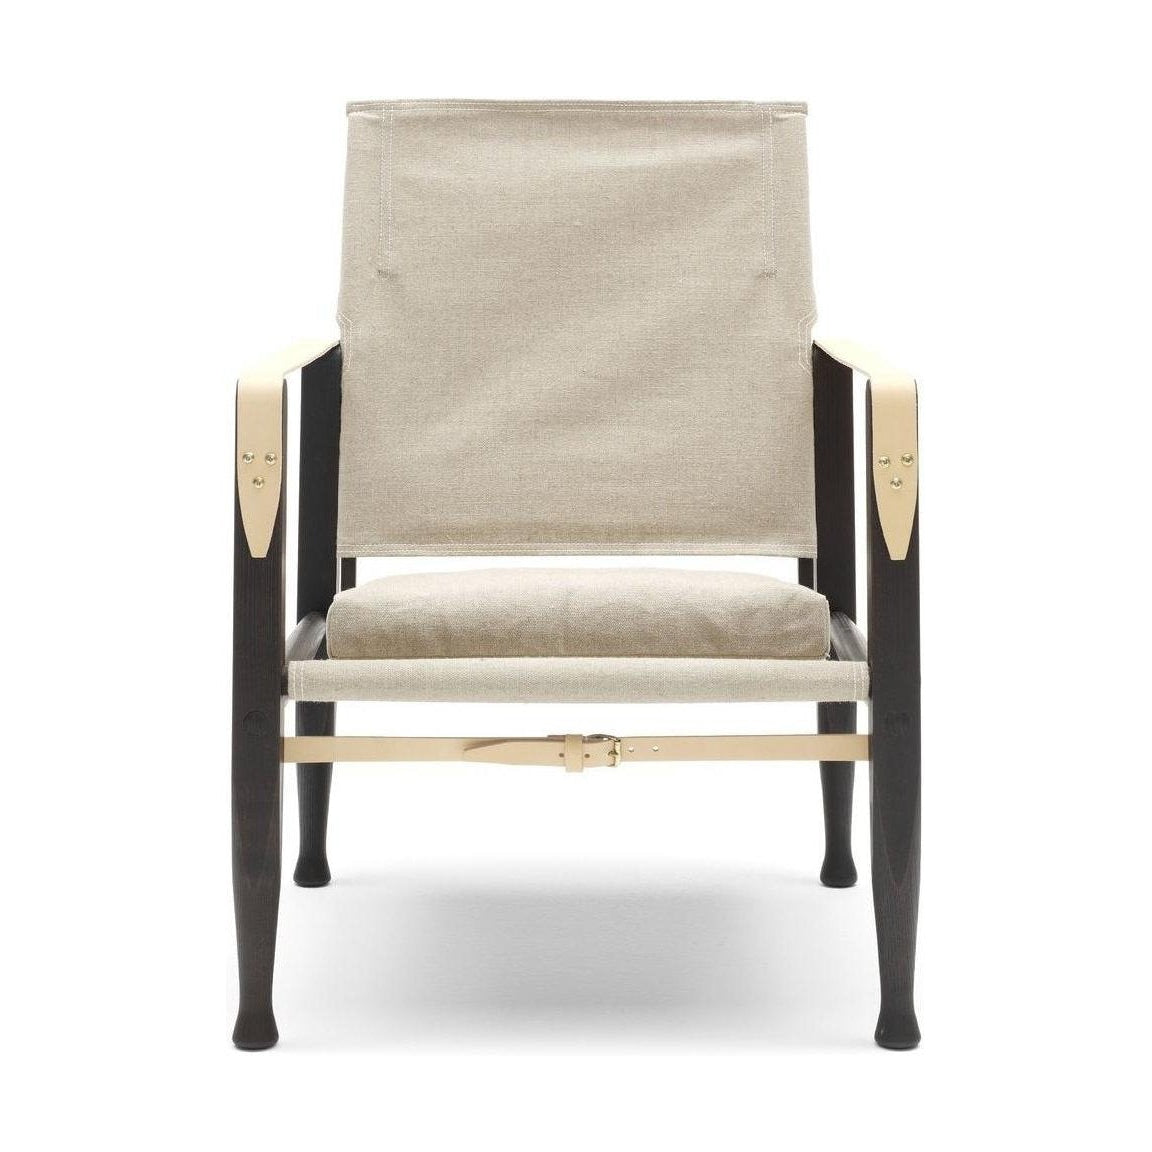 Carl Hansen Kk47000 Safari Chair, Smoked Ash/Natural